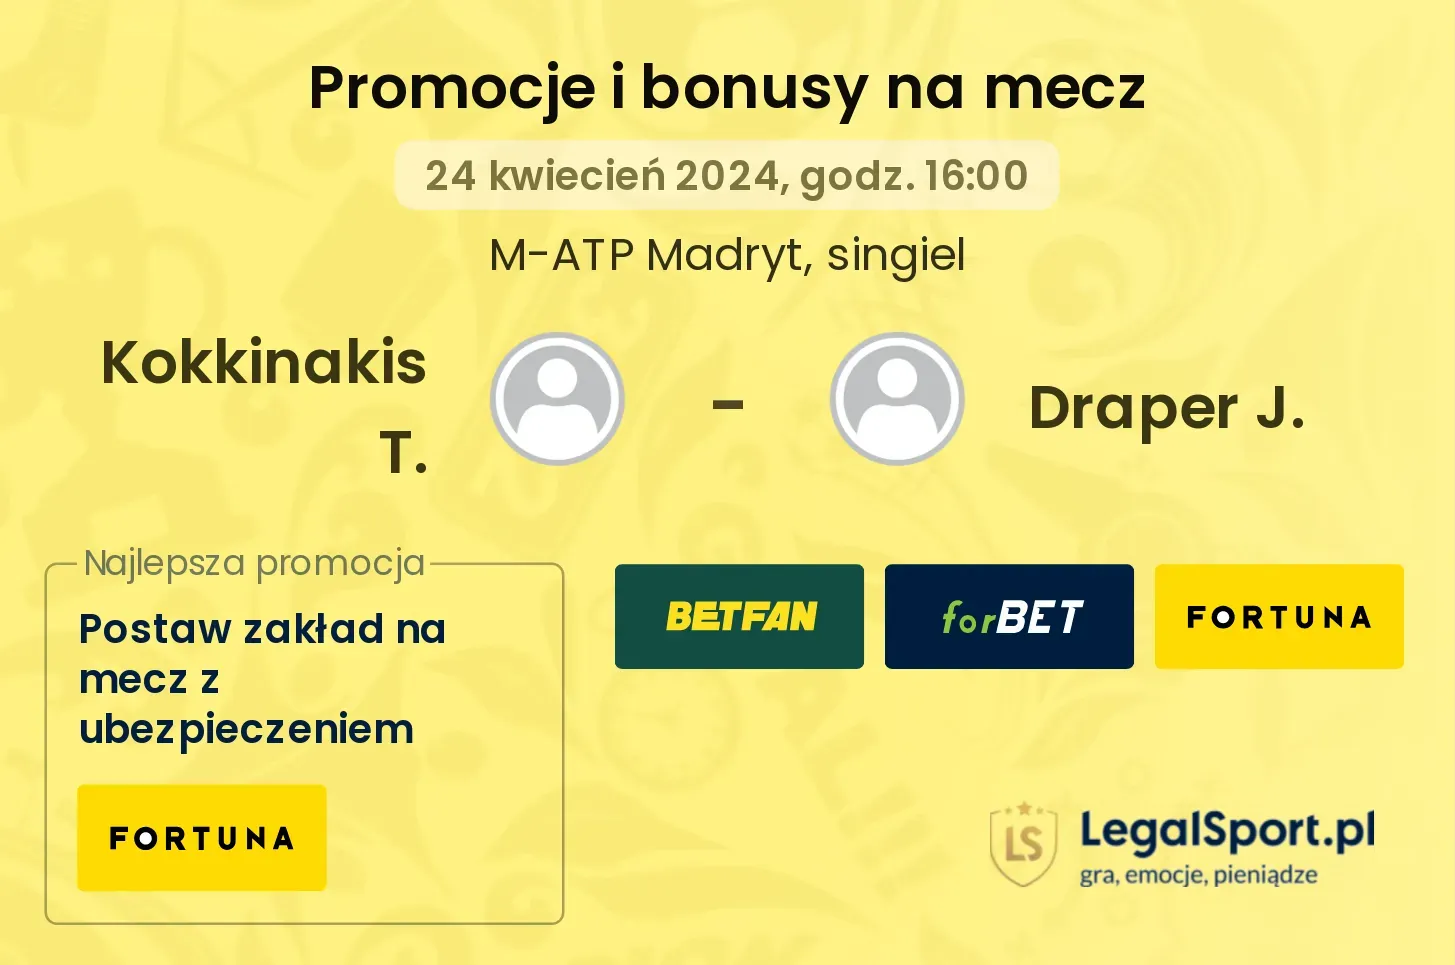 Kokkinakis T. - Draper J. promocje bonusy na mecz